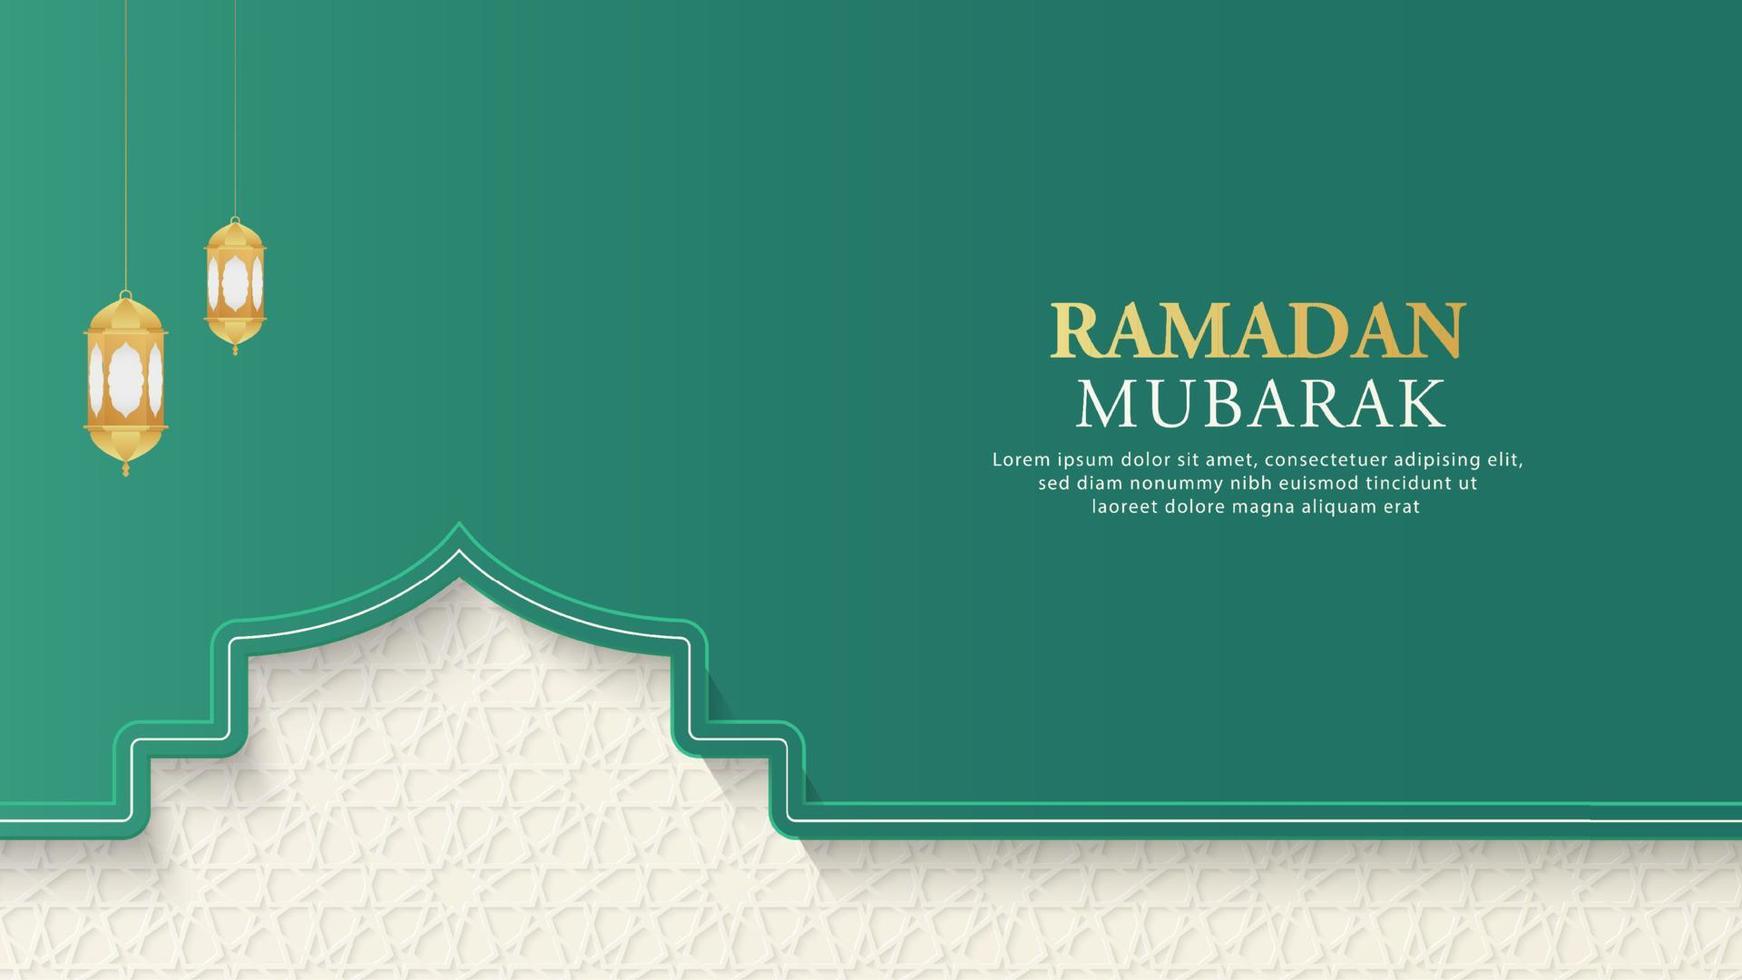 Ramadan Mubarak ornamental arco islâmico de fundo com lanternas de estilo árabe vetor